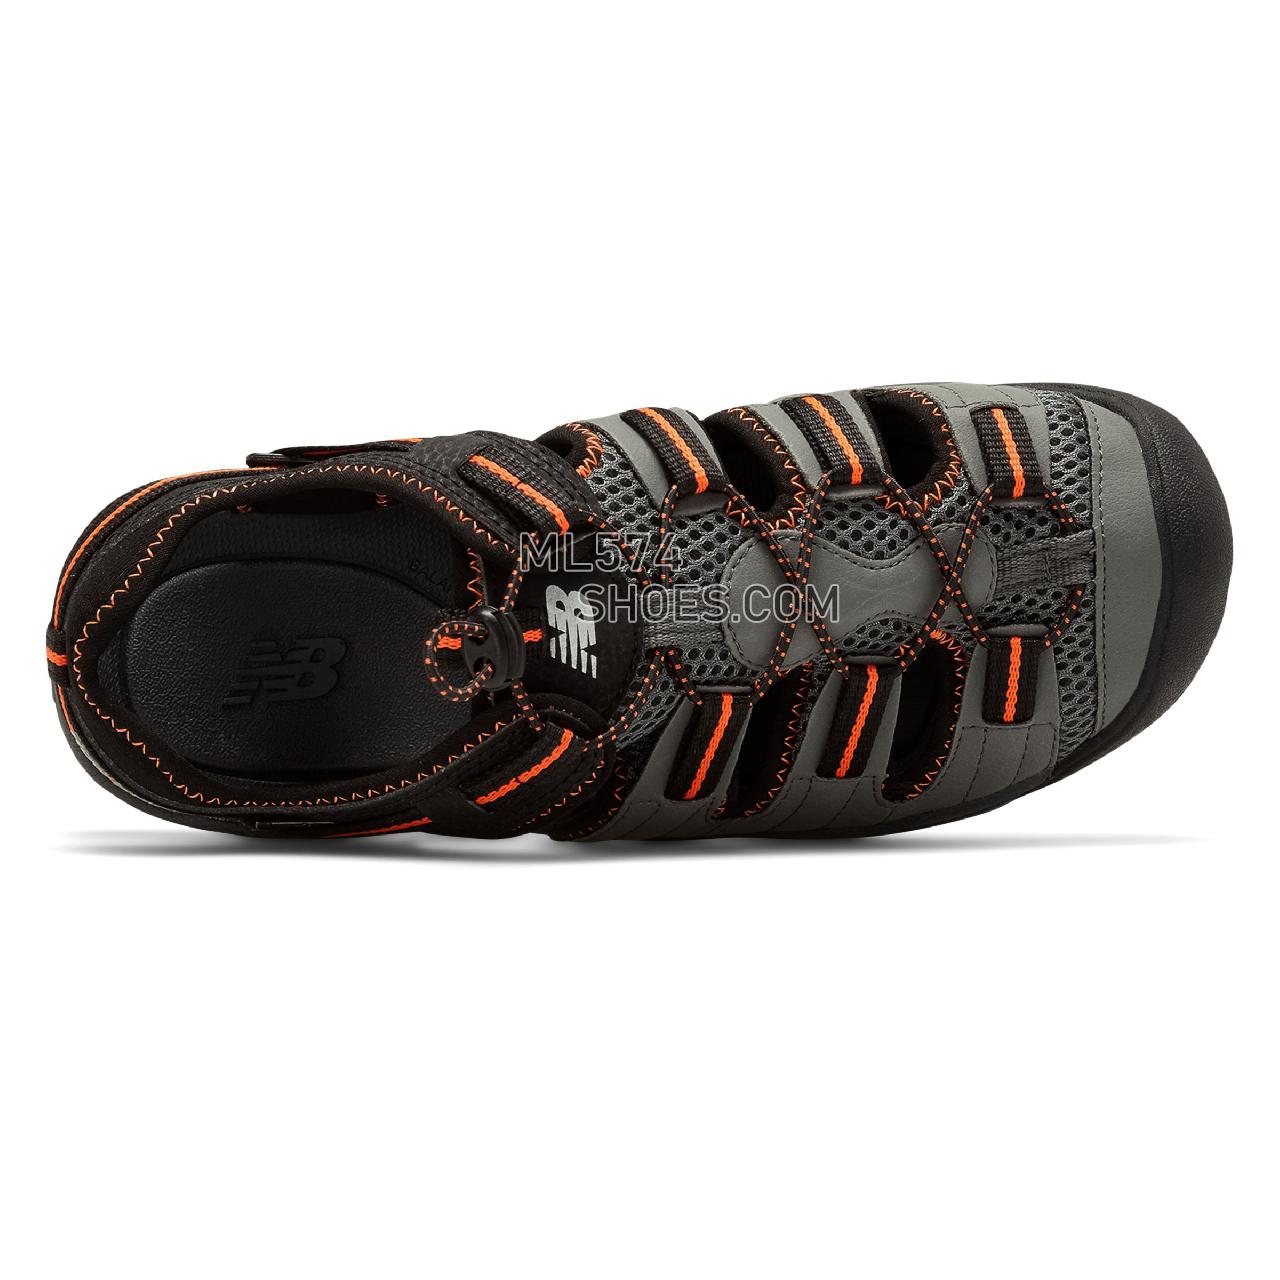 New Balance Appalachian Sandal - Men's 2040 - Sandals Black with Orange - M2040BON